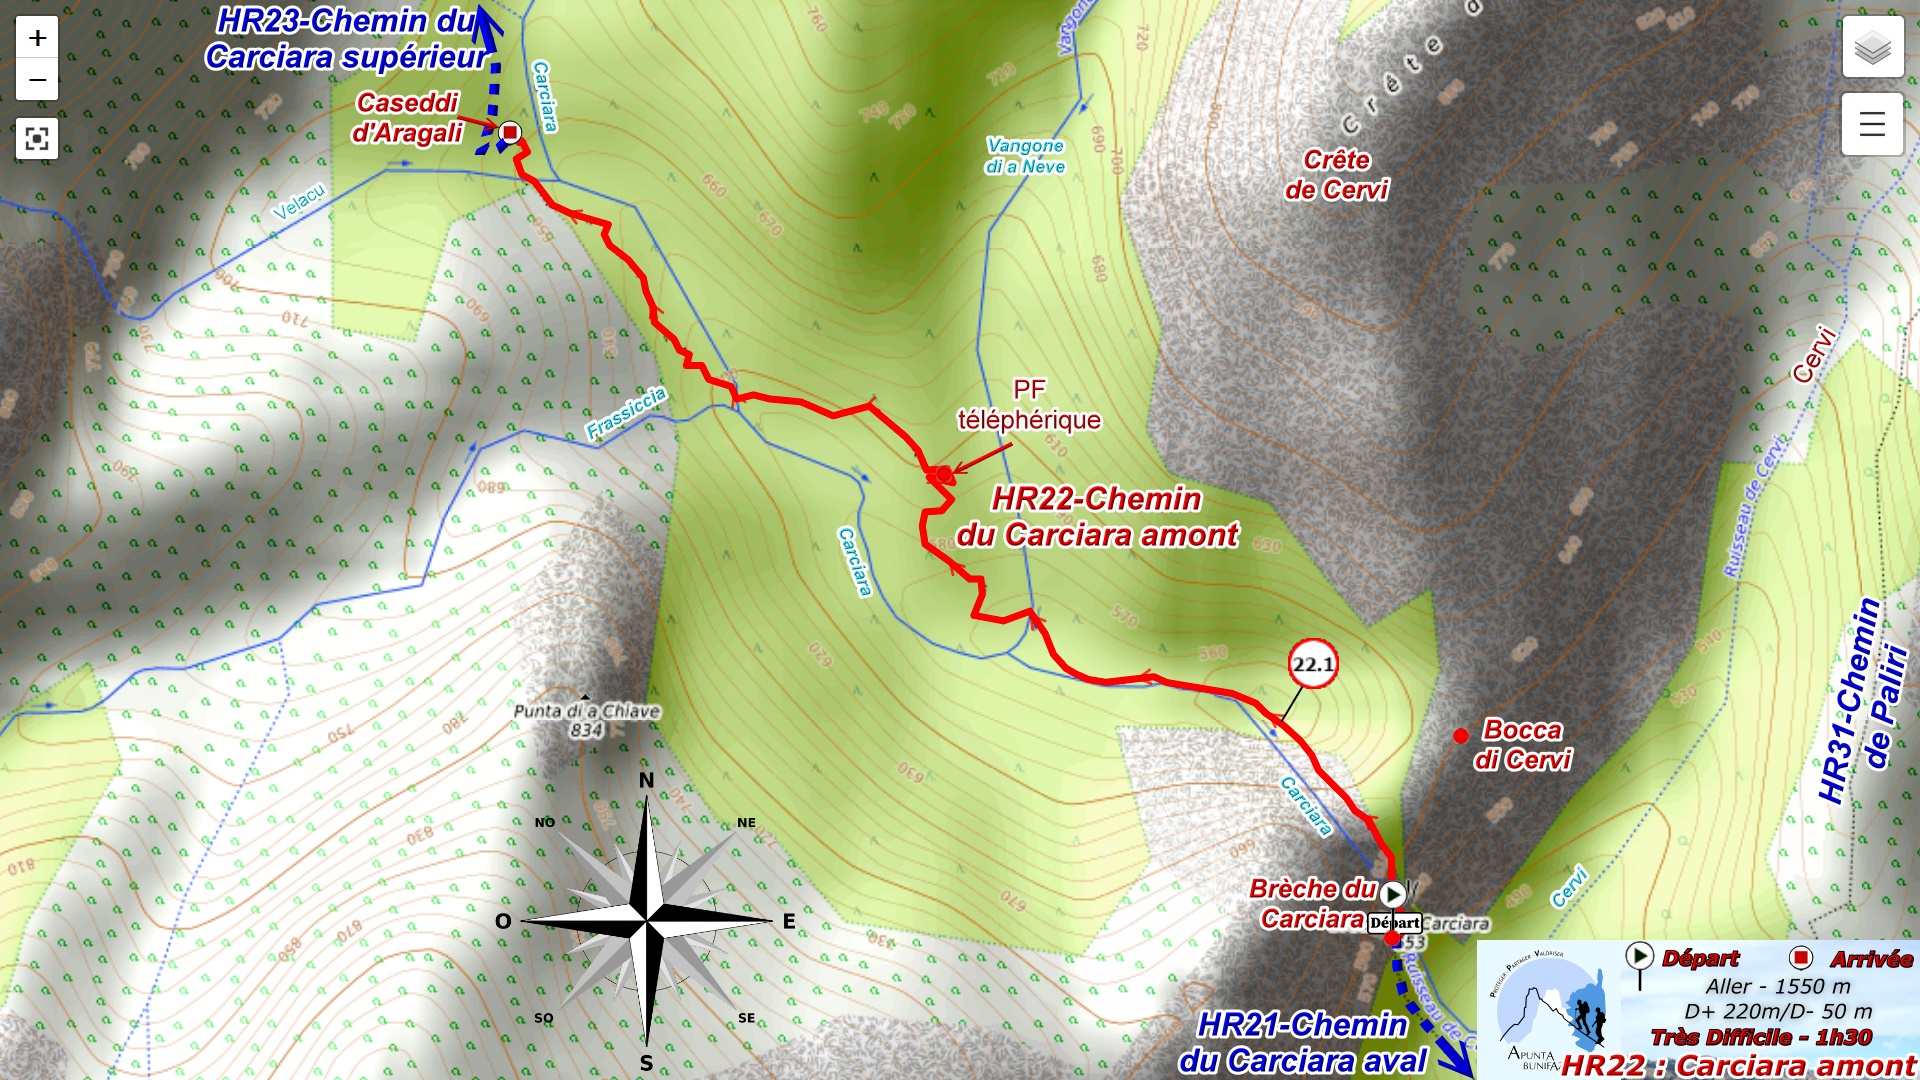 Plan HR22 : Chemin du Carciara amont